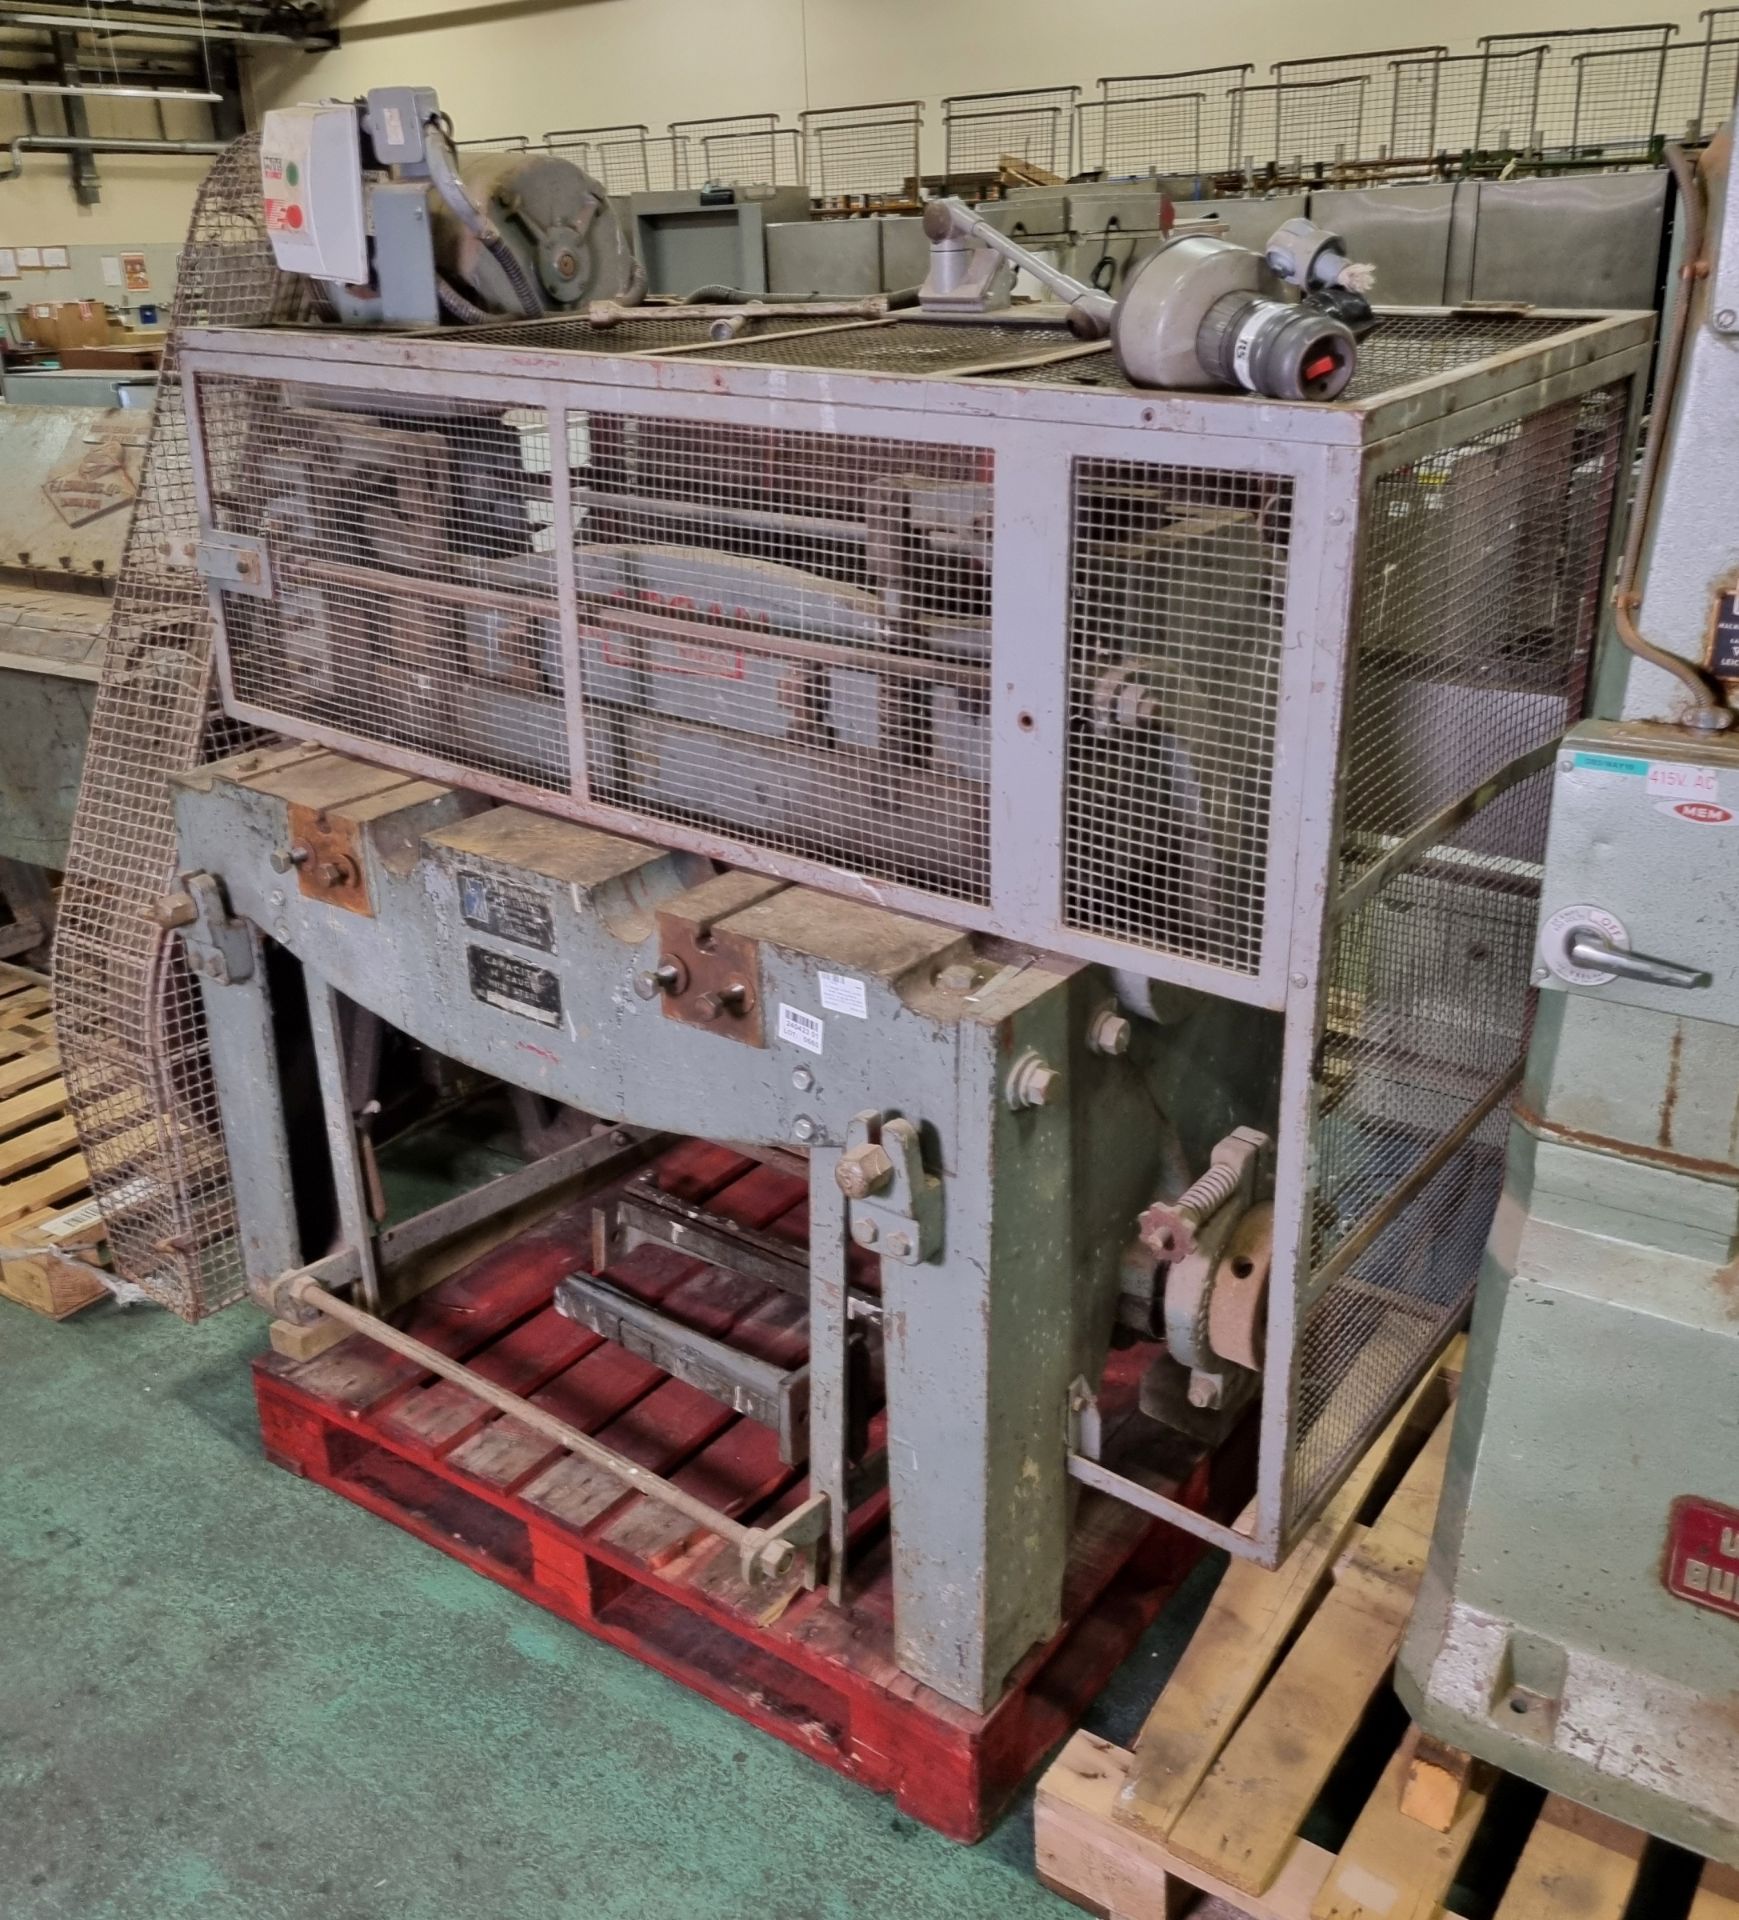 BMM Weston L1566 industrial laundry press - 440V - W 1650 x D 1000 x H 1350mm - Image 9 of 15